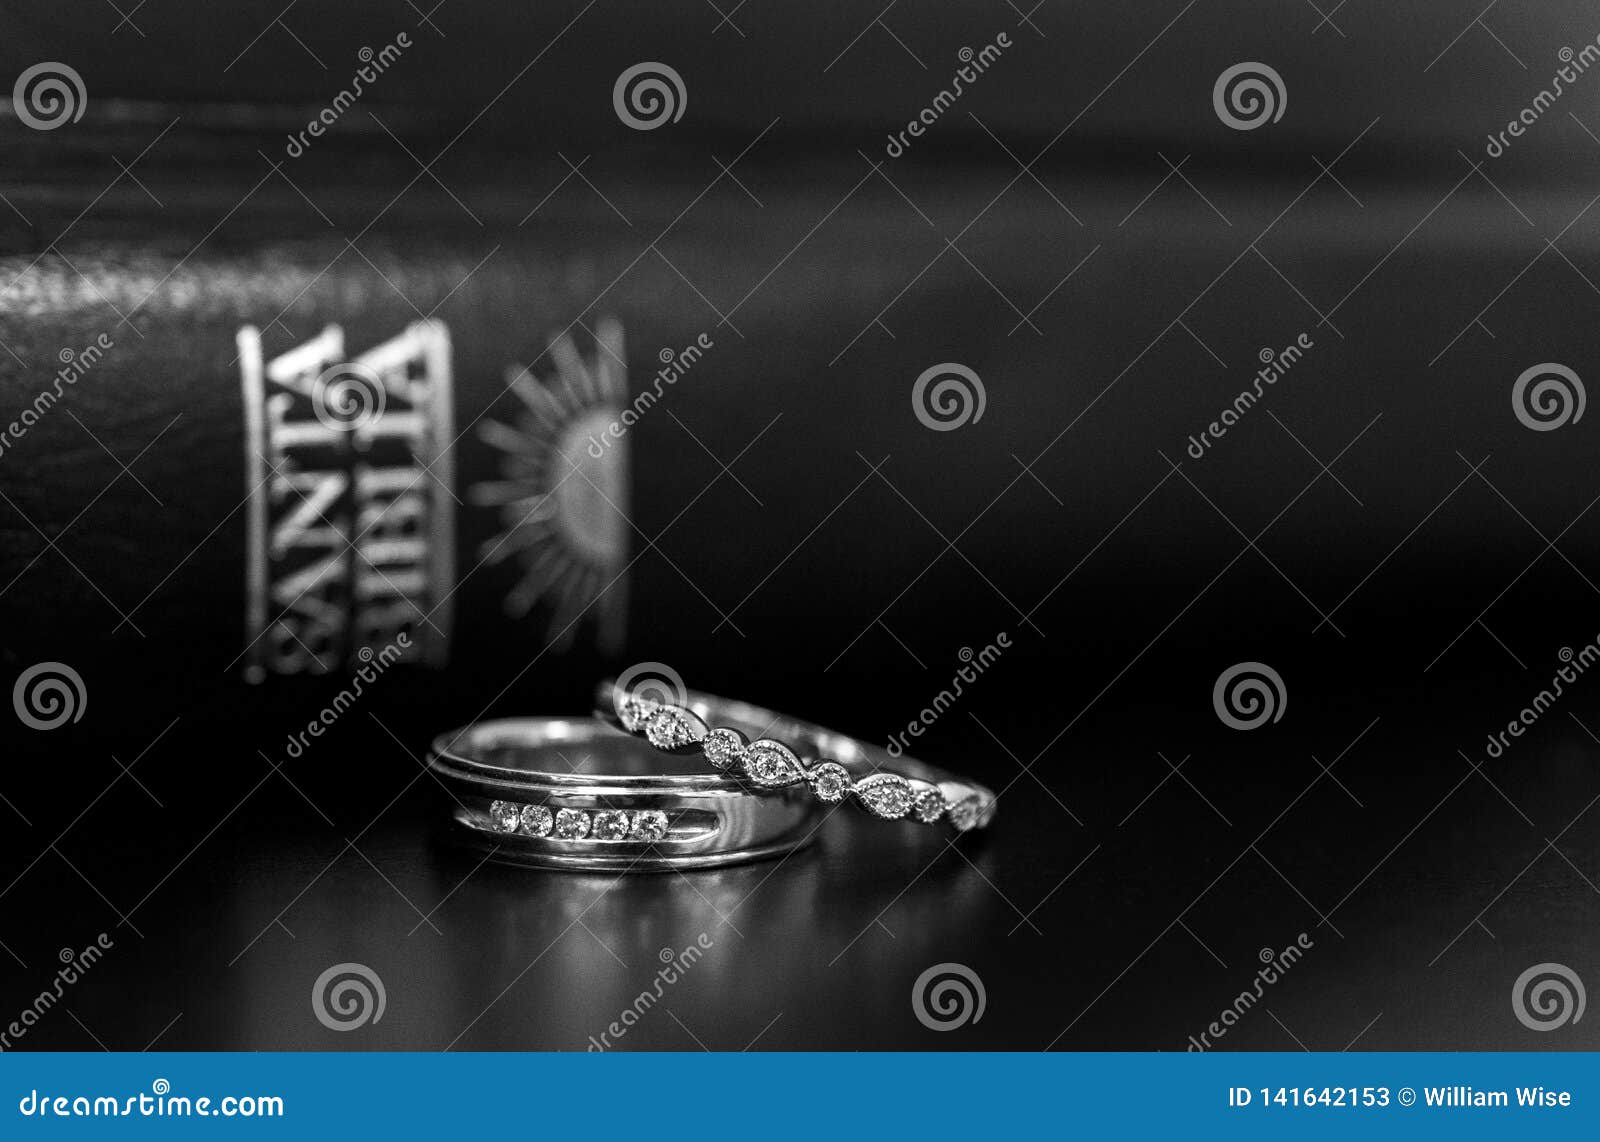 wedding rings and spanish bible